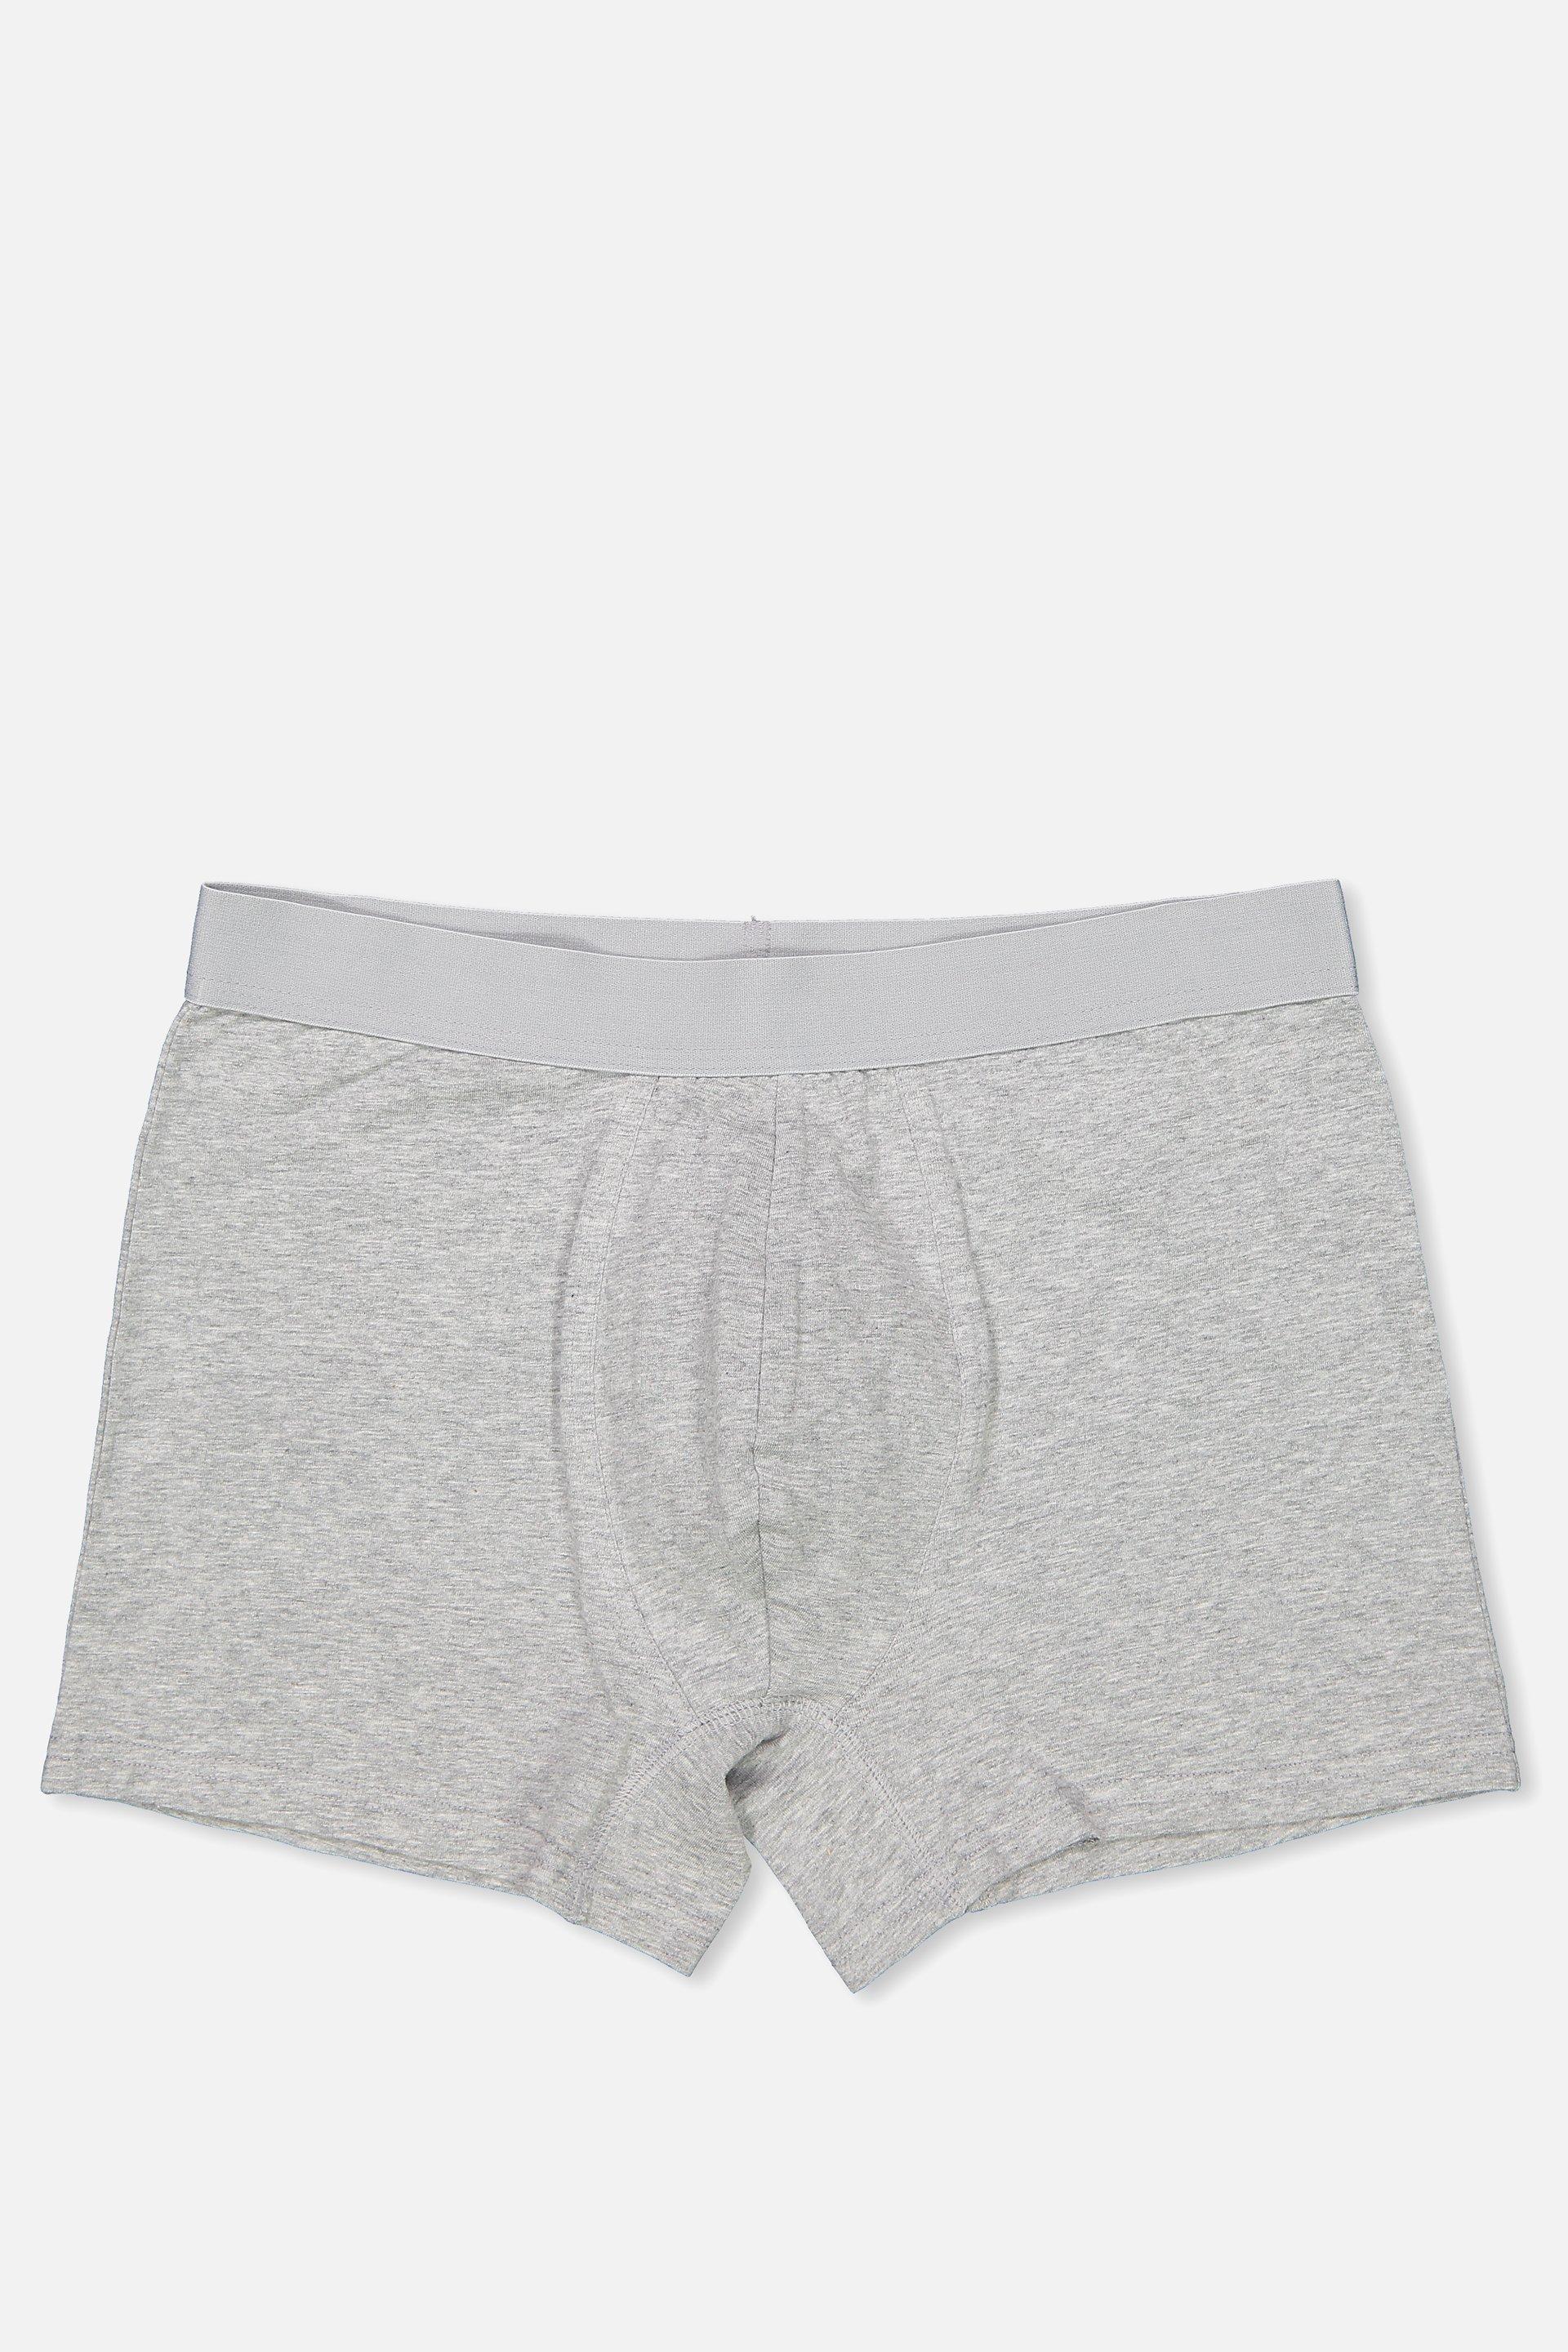 Single hanging trunks - grey marle Cotton On Underwear | Superbalist.com